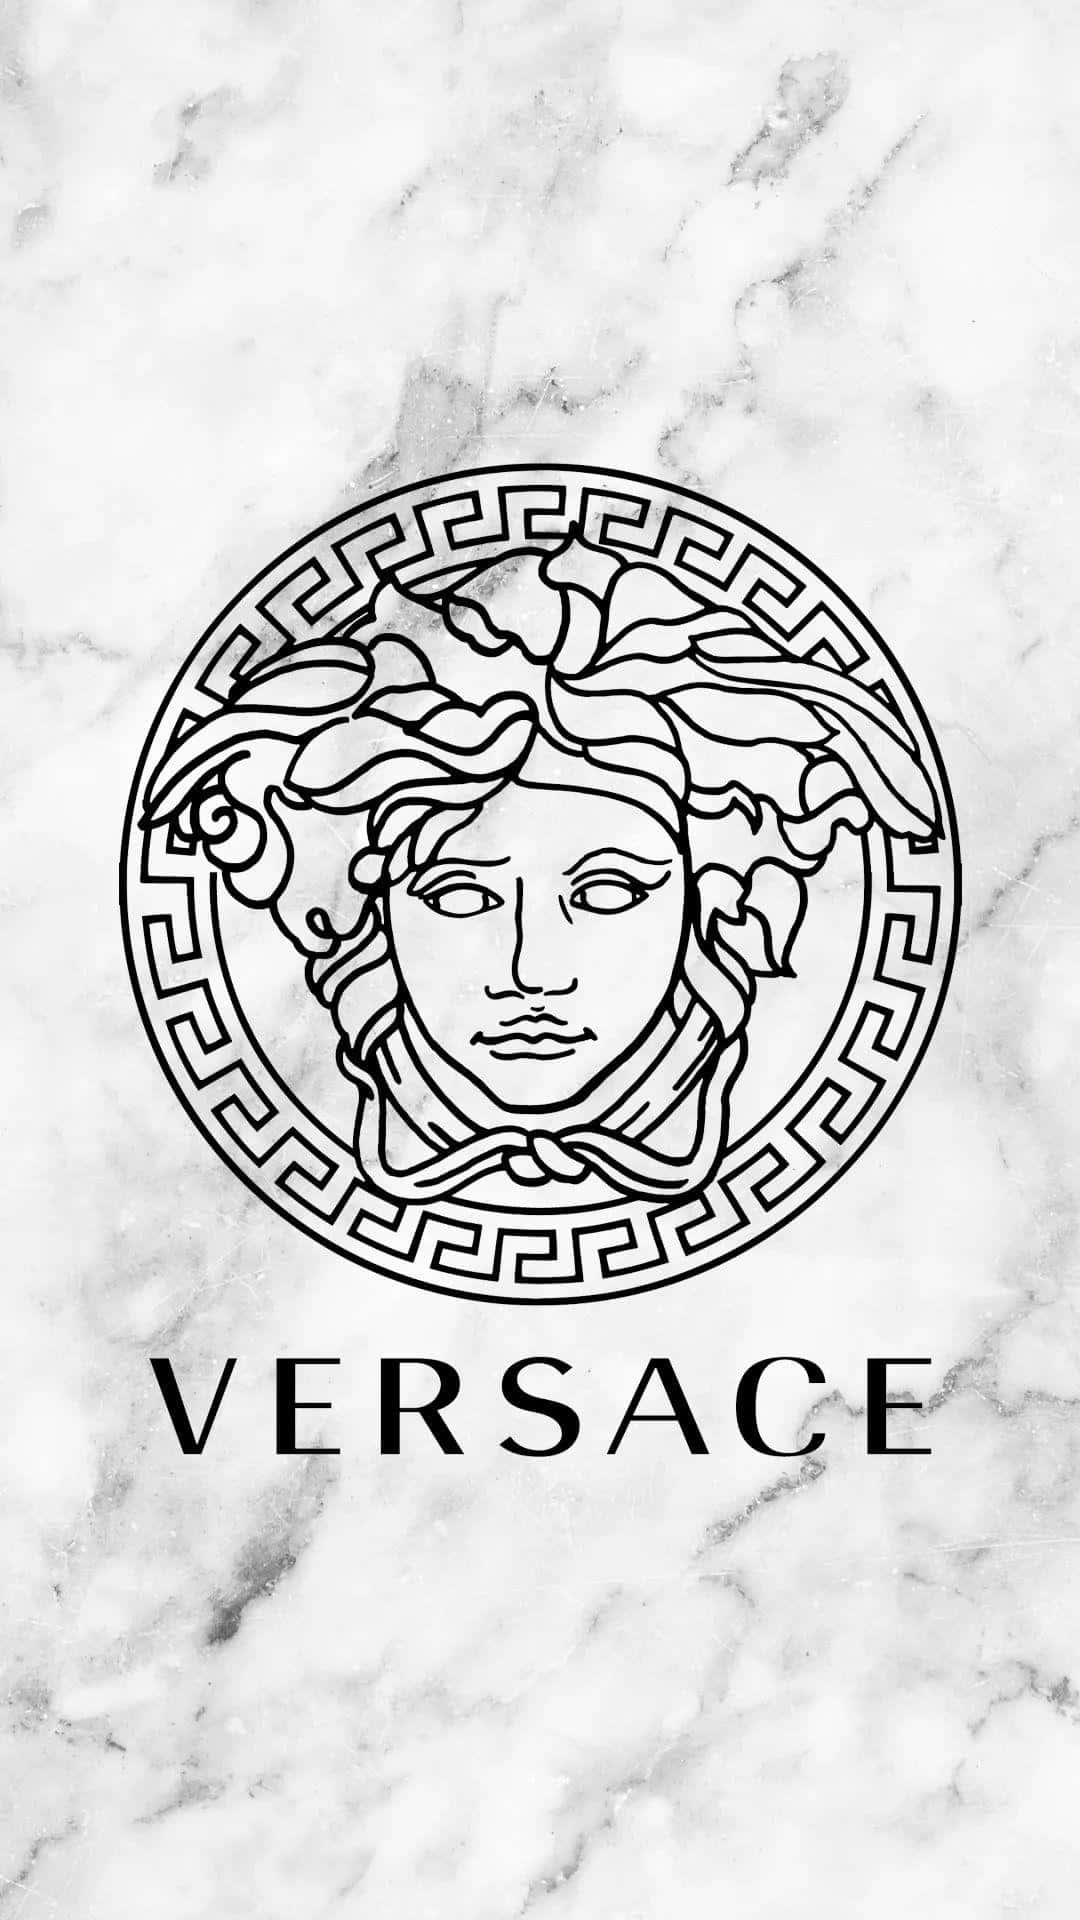 versace twitter background